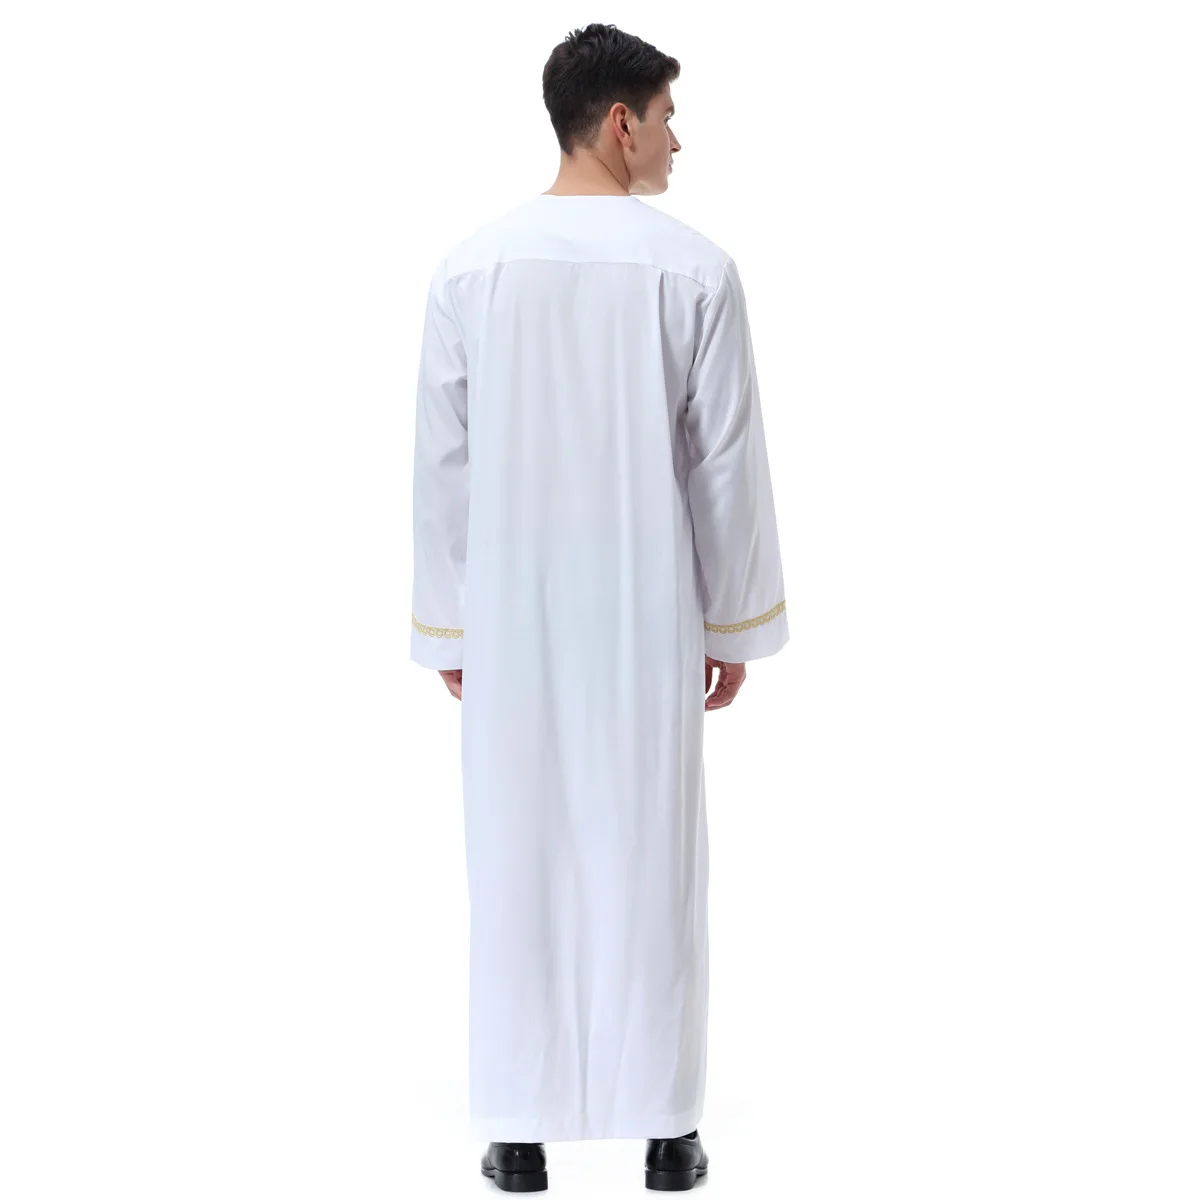 Messieurs Musulman Abaya Saoudien Thobe Robe Sweats Caftan islamique Jubba thawb Tops 